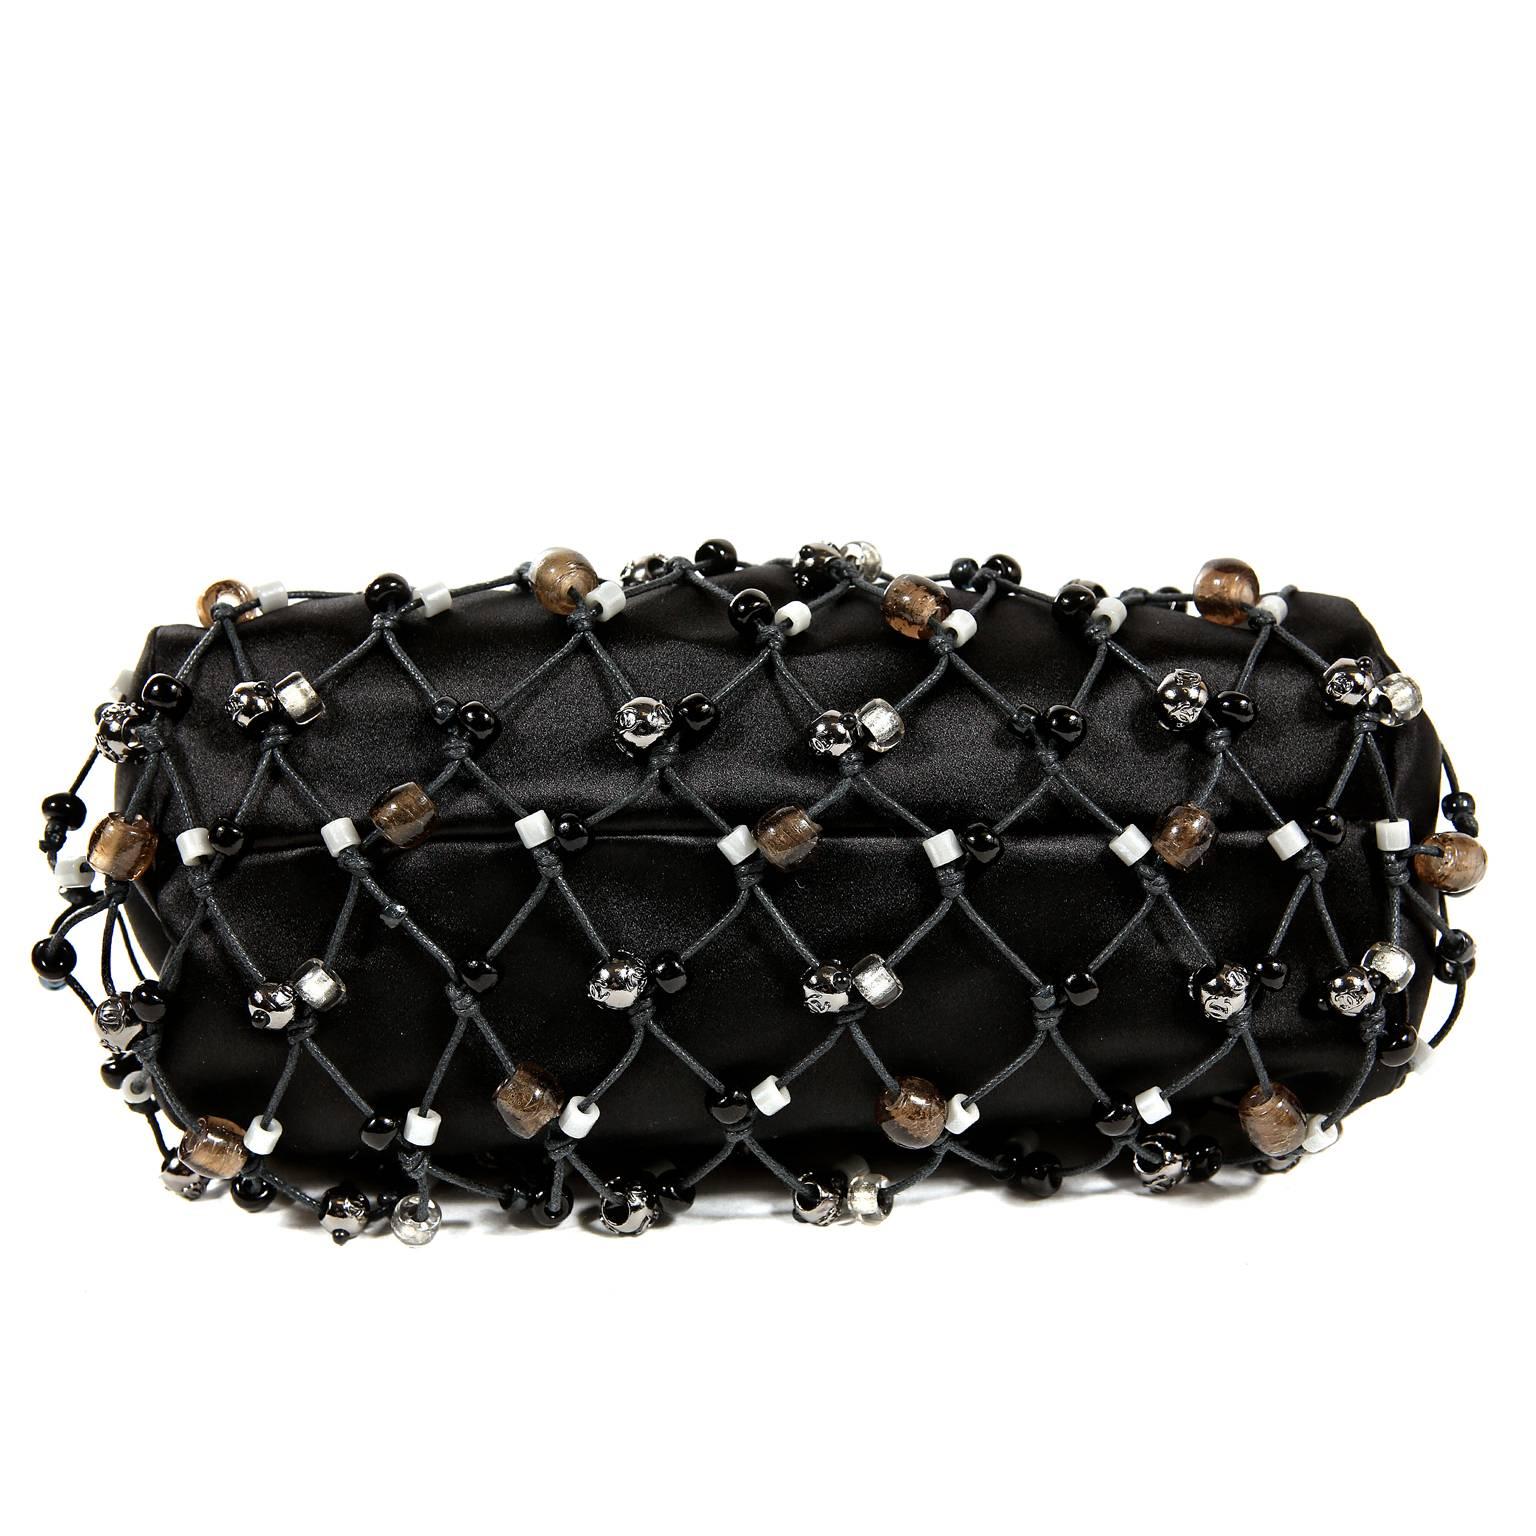 Women's Chanel Black Mesh Evening Bag